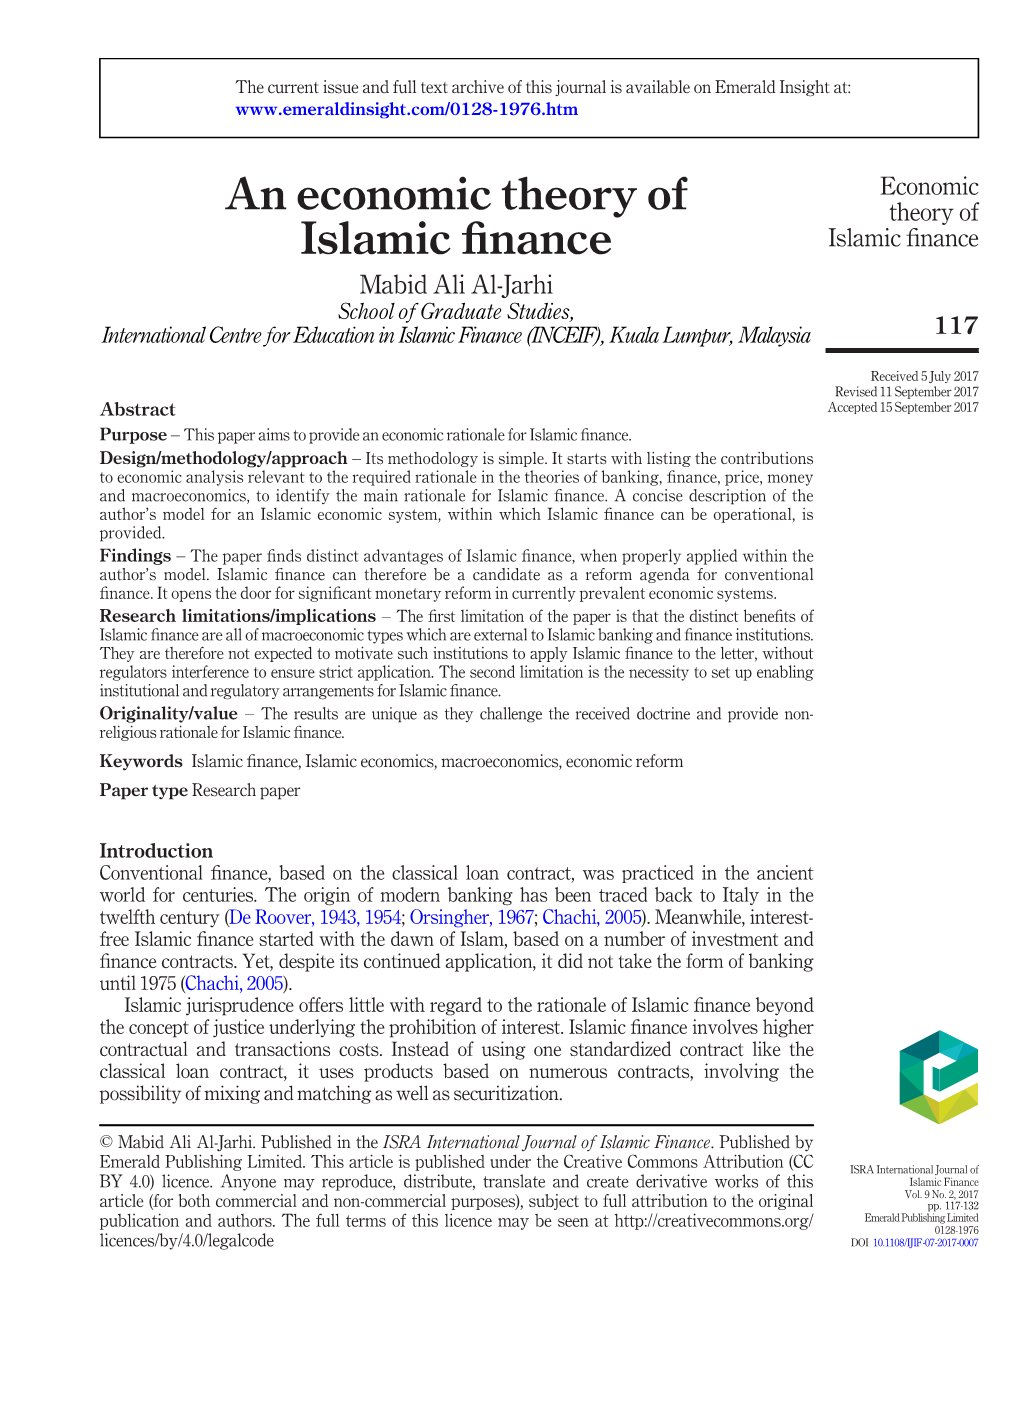 An Economic Theory of Islamic Finance